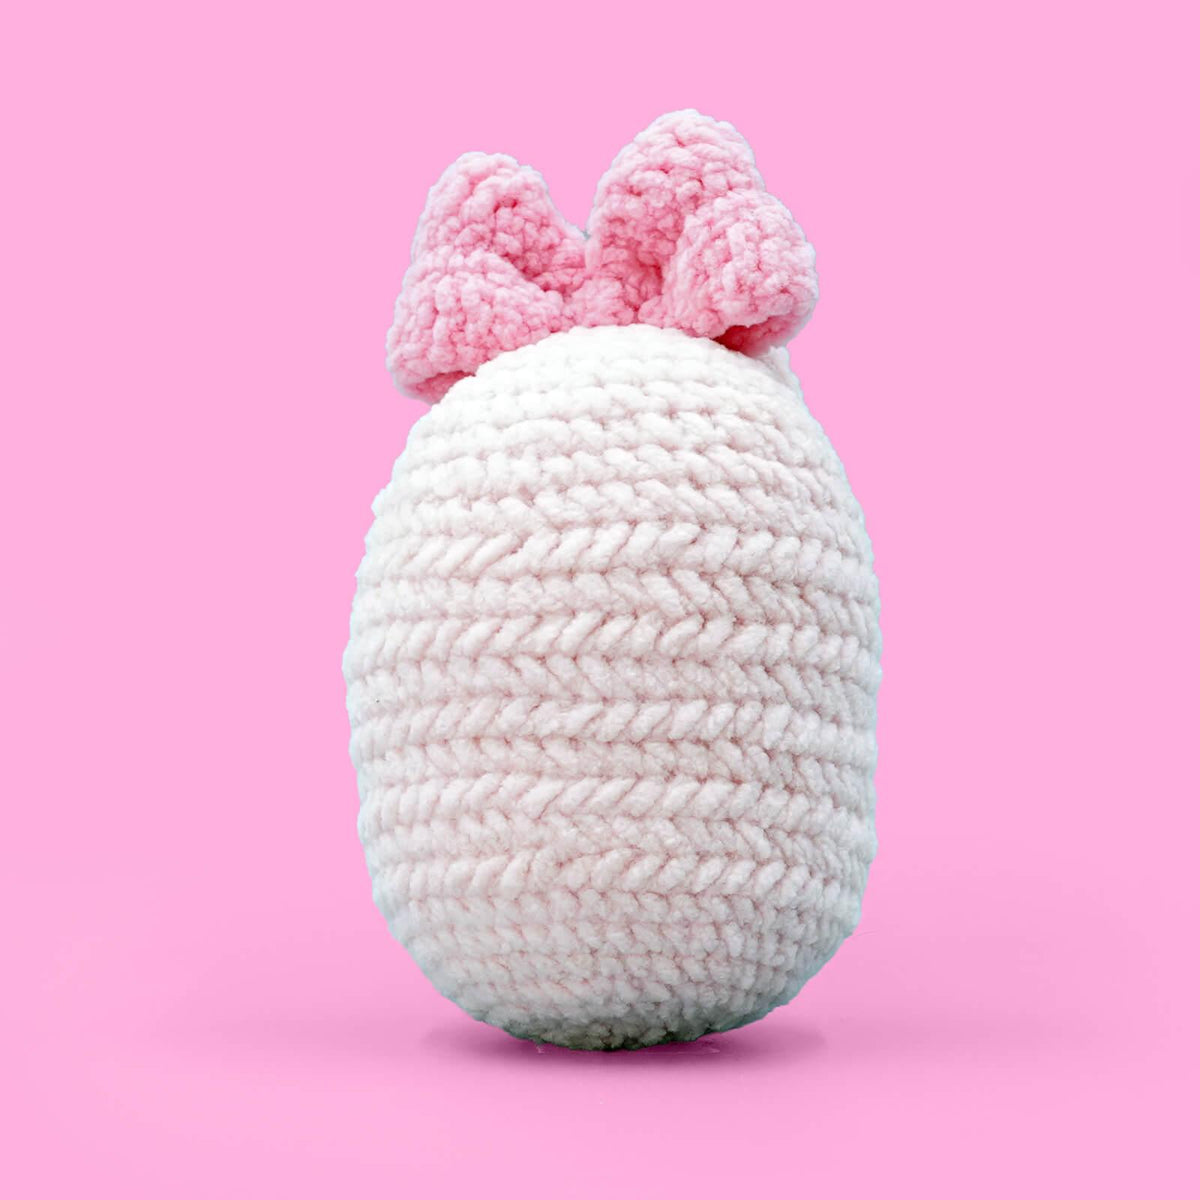 Pig Animal Crochet Kits with Cotton Yarn for Kids - HiCrochet